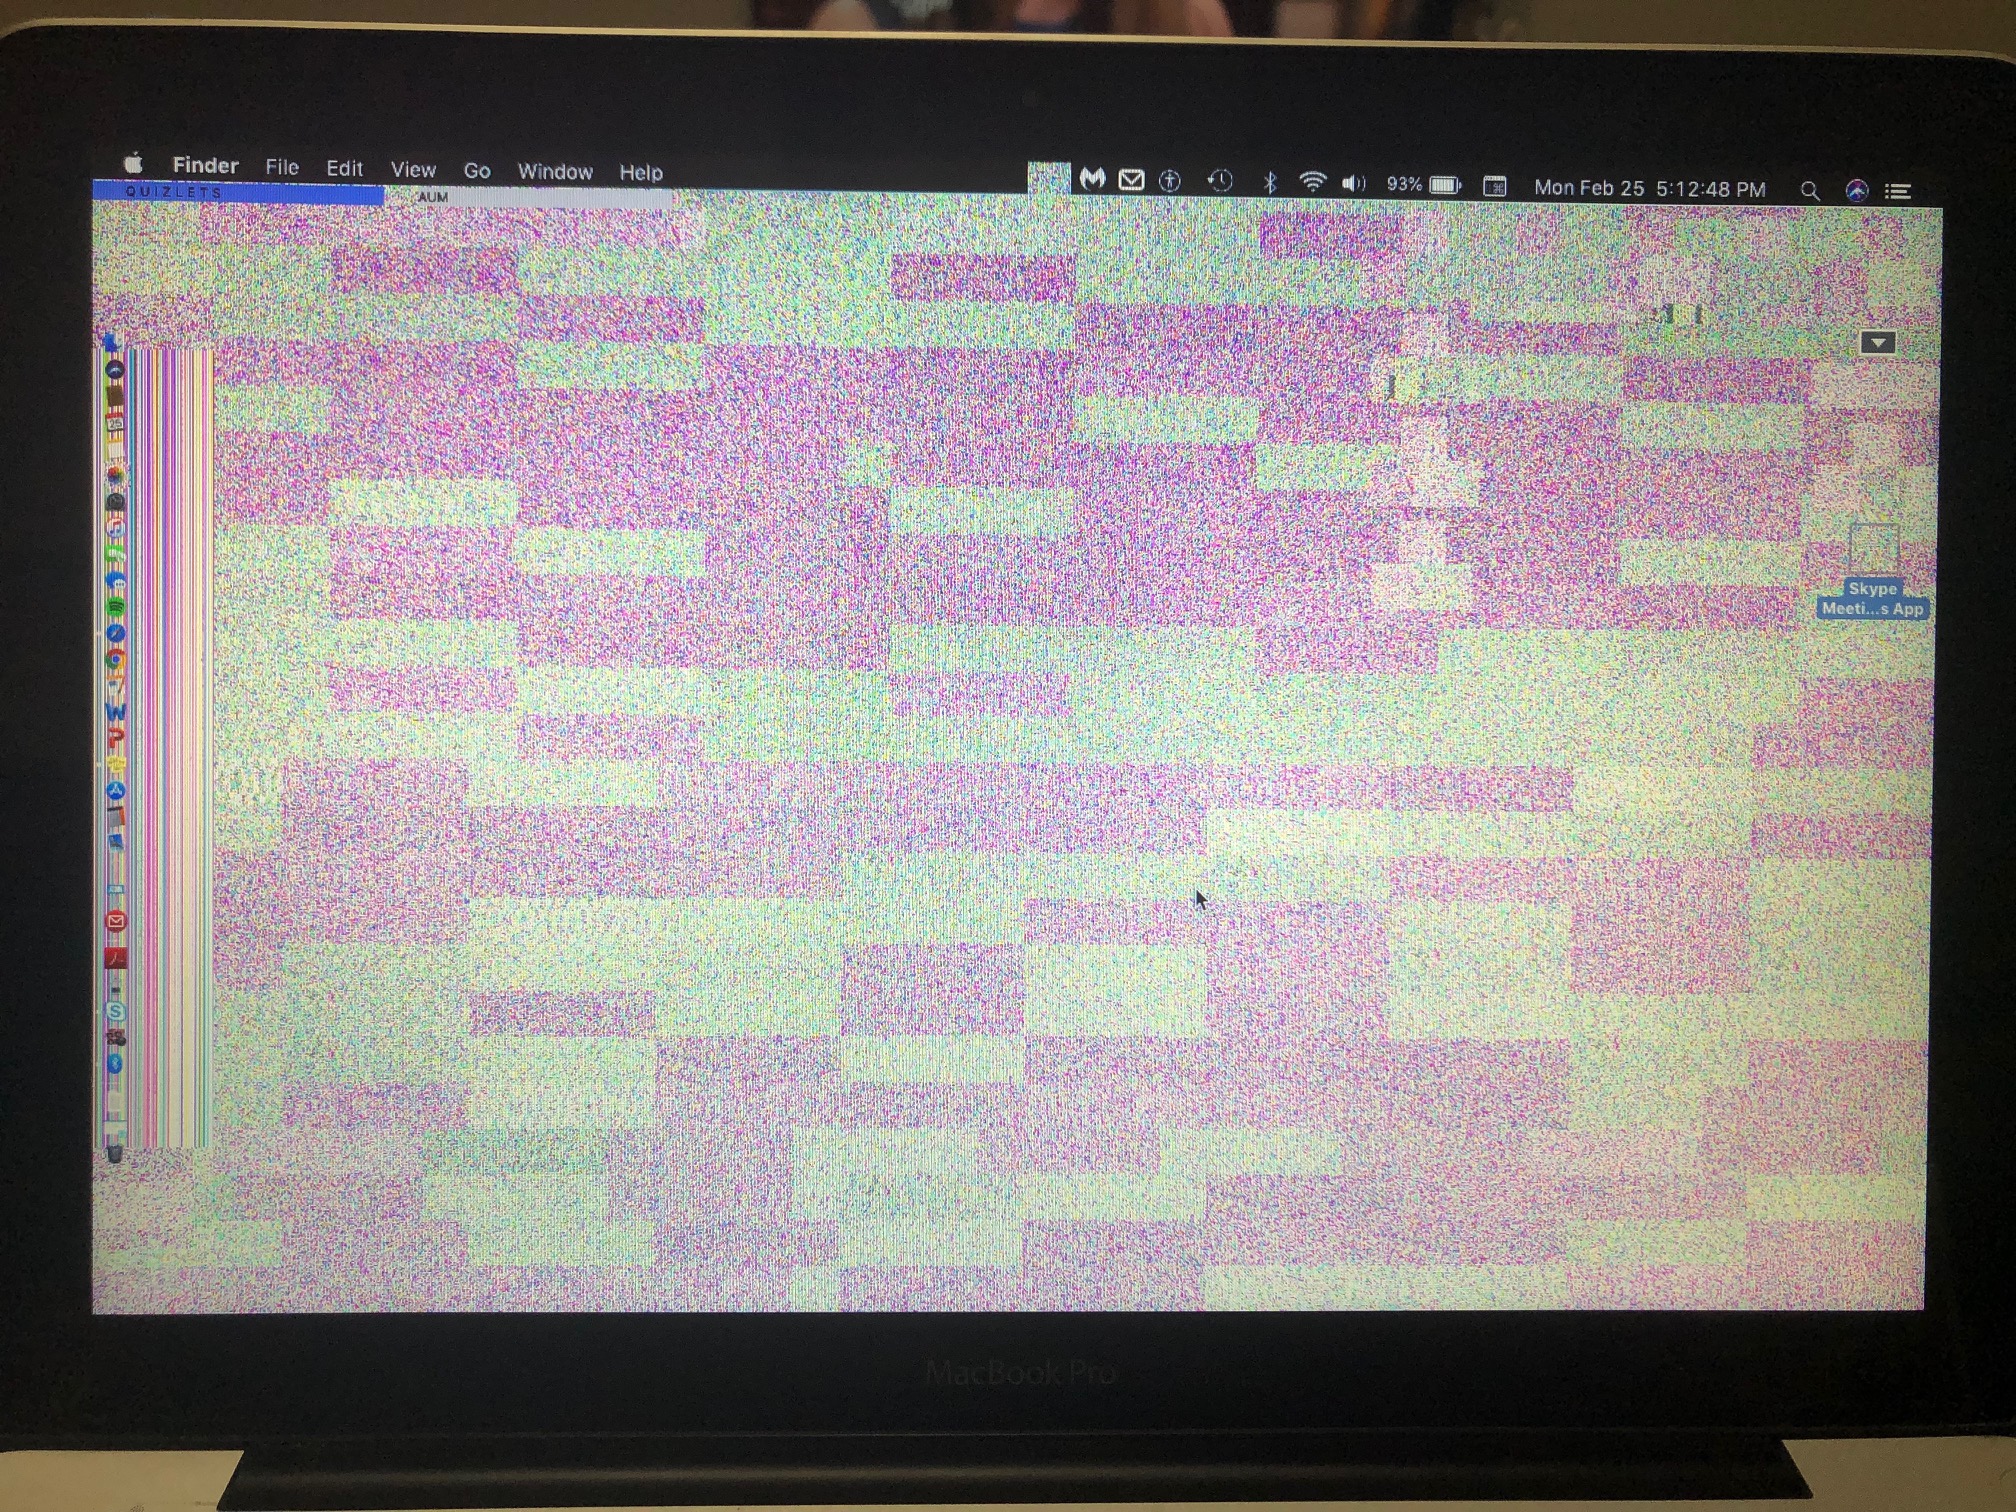 Mac retina display everything pixelated hermes birkin bag mini